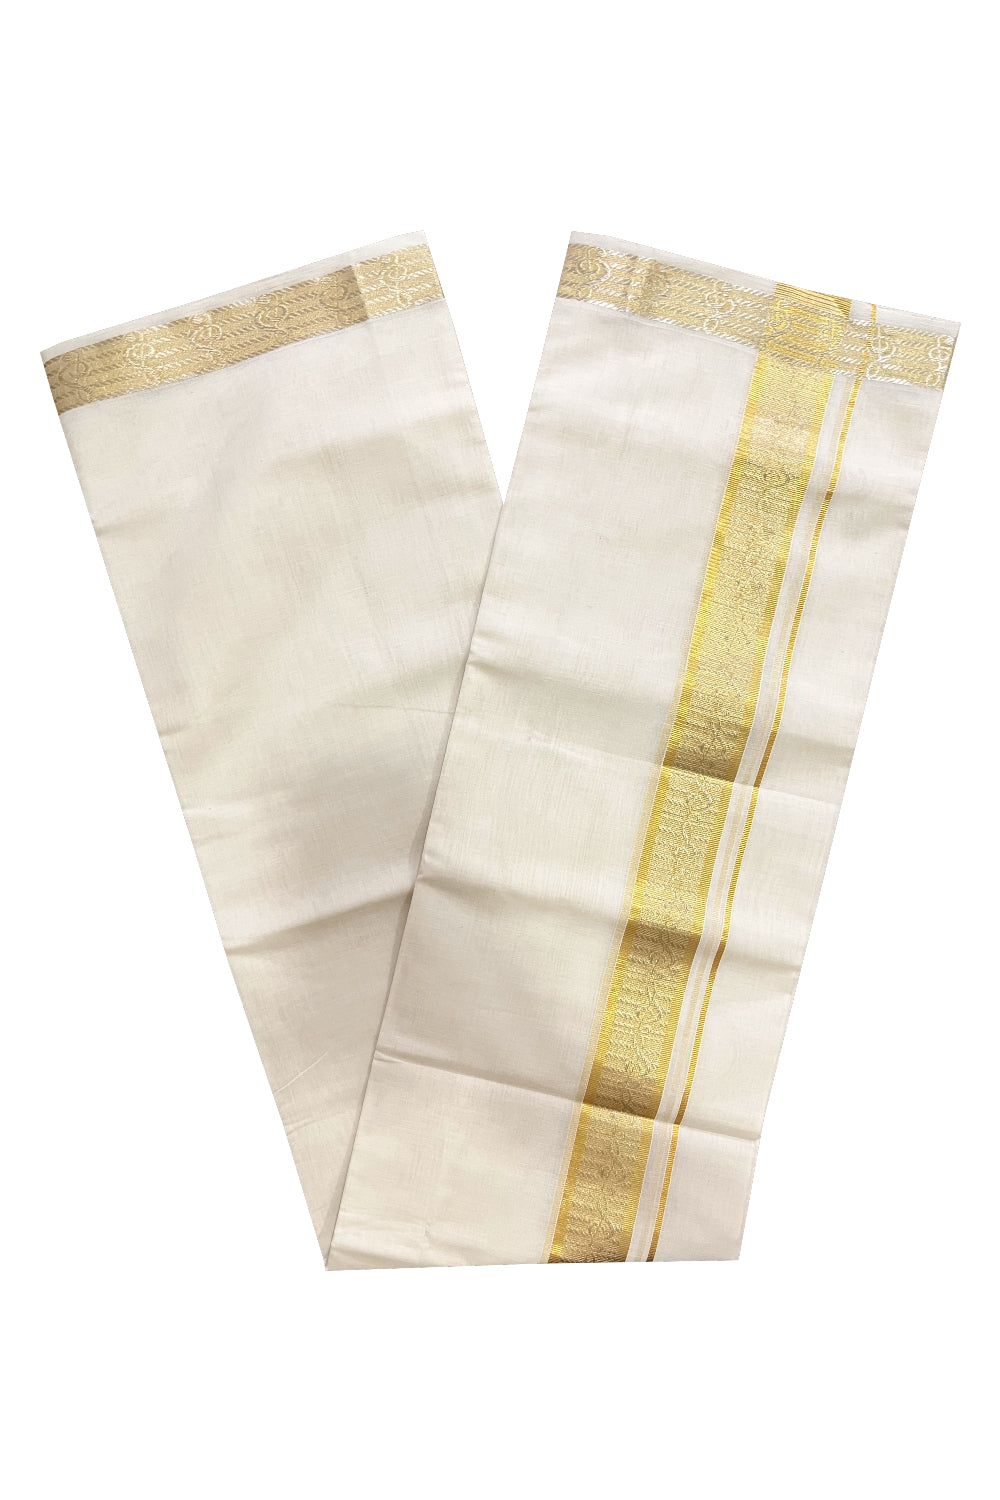 Southloom Super Premium Balaramapuram Unakkupaavu Handloom Double Wedding Mundu with Silver and Golden Kasavu Woven Border